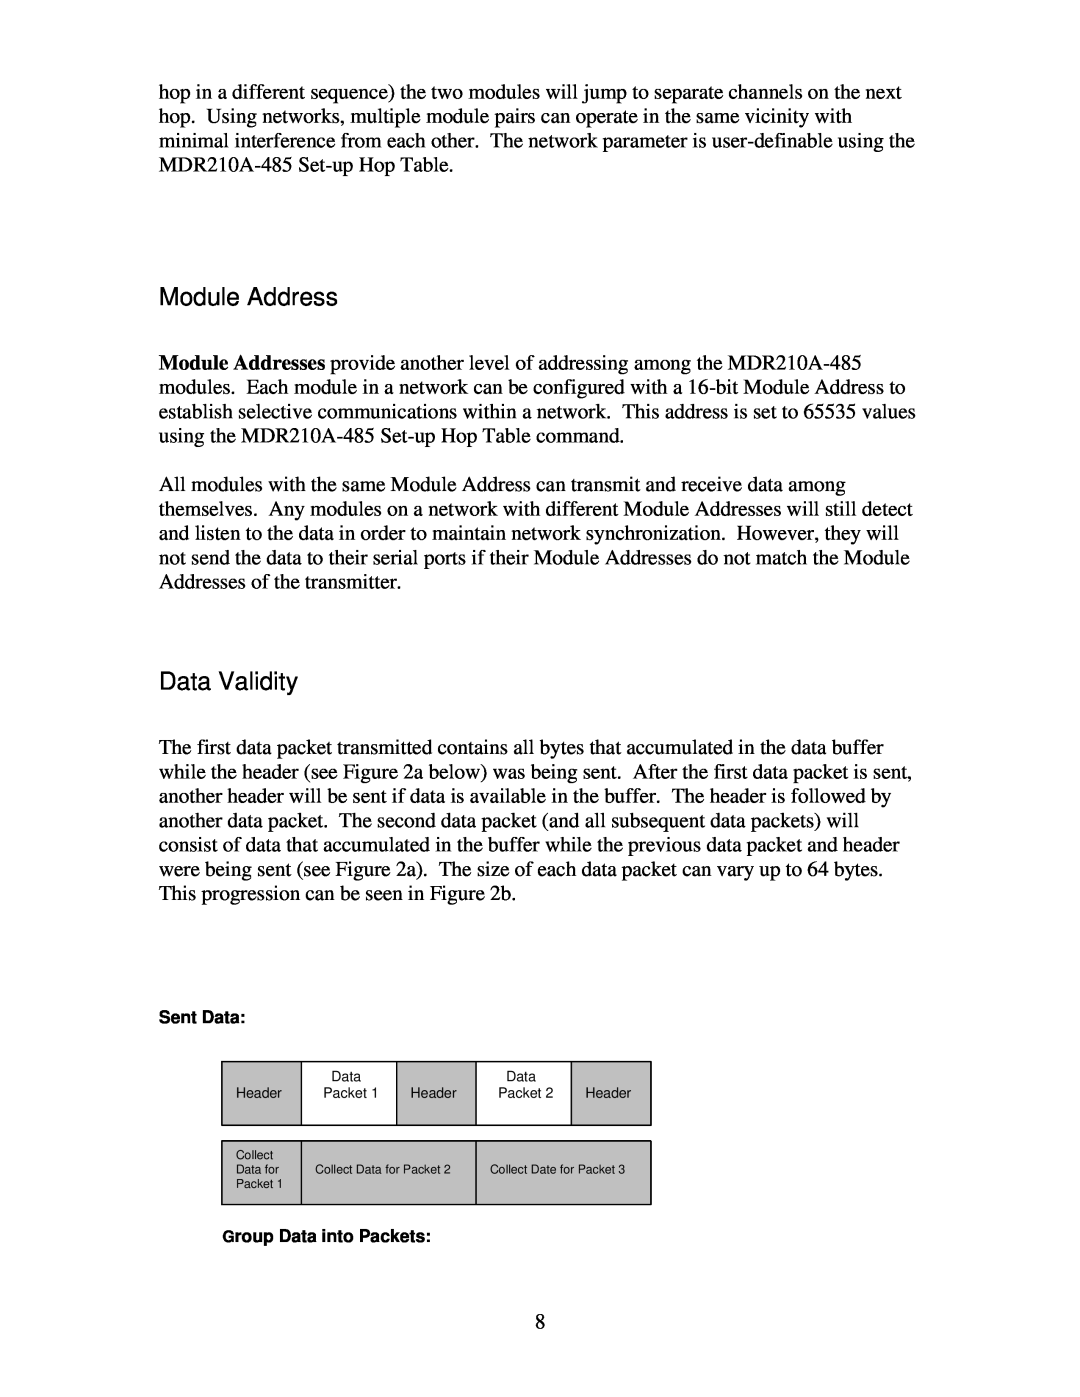 Black Box MDR210A-485 manual Module Address, Data Validity 